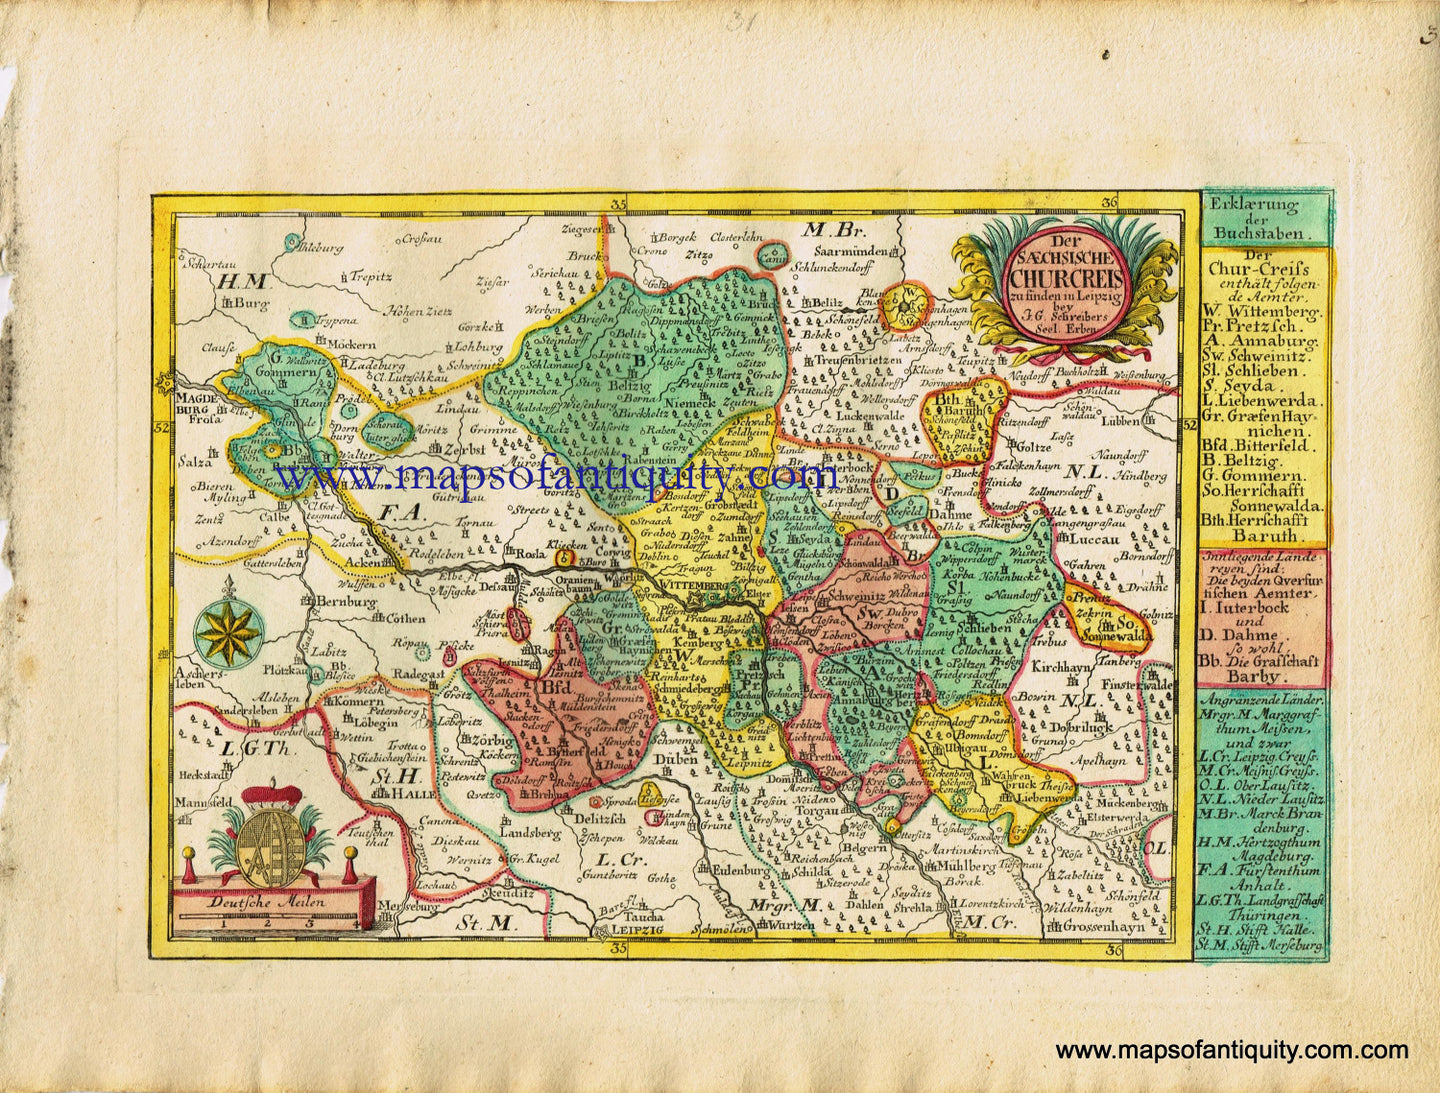 Antique-Hand-Colored-Map-Der-Saechsische-churcreis--Europe-Germany-1749-Johann-George-Schreibern-Maps-Of-Antiquity